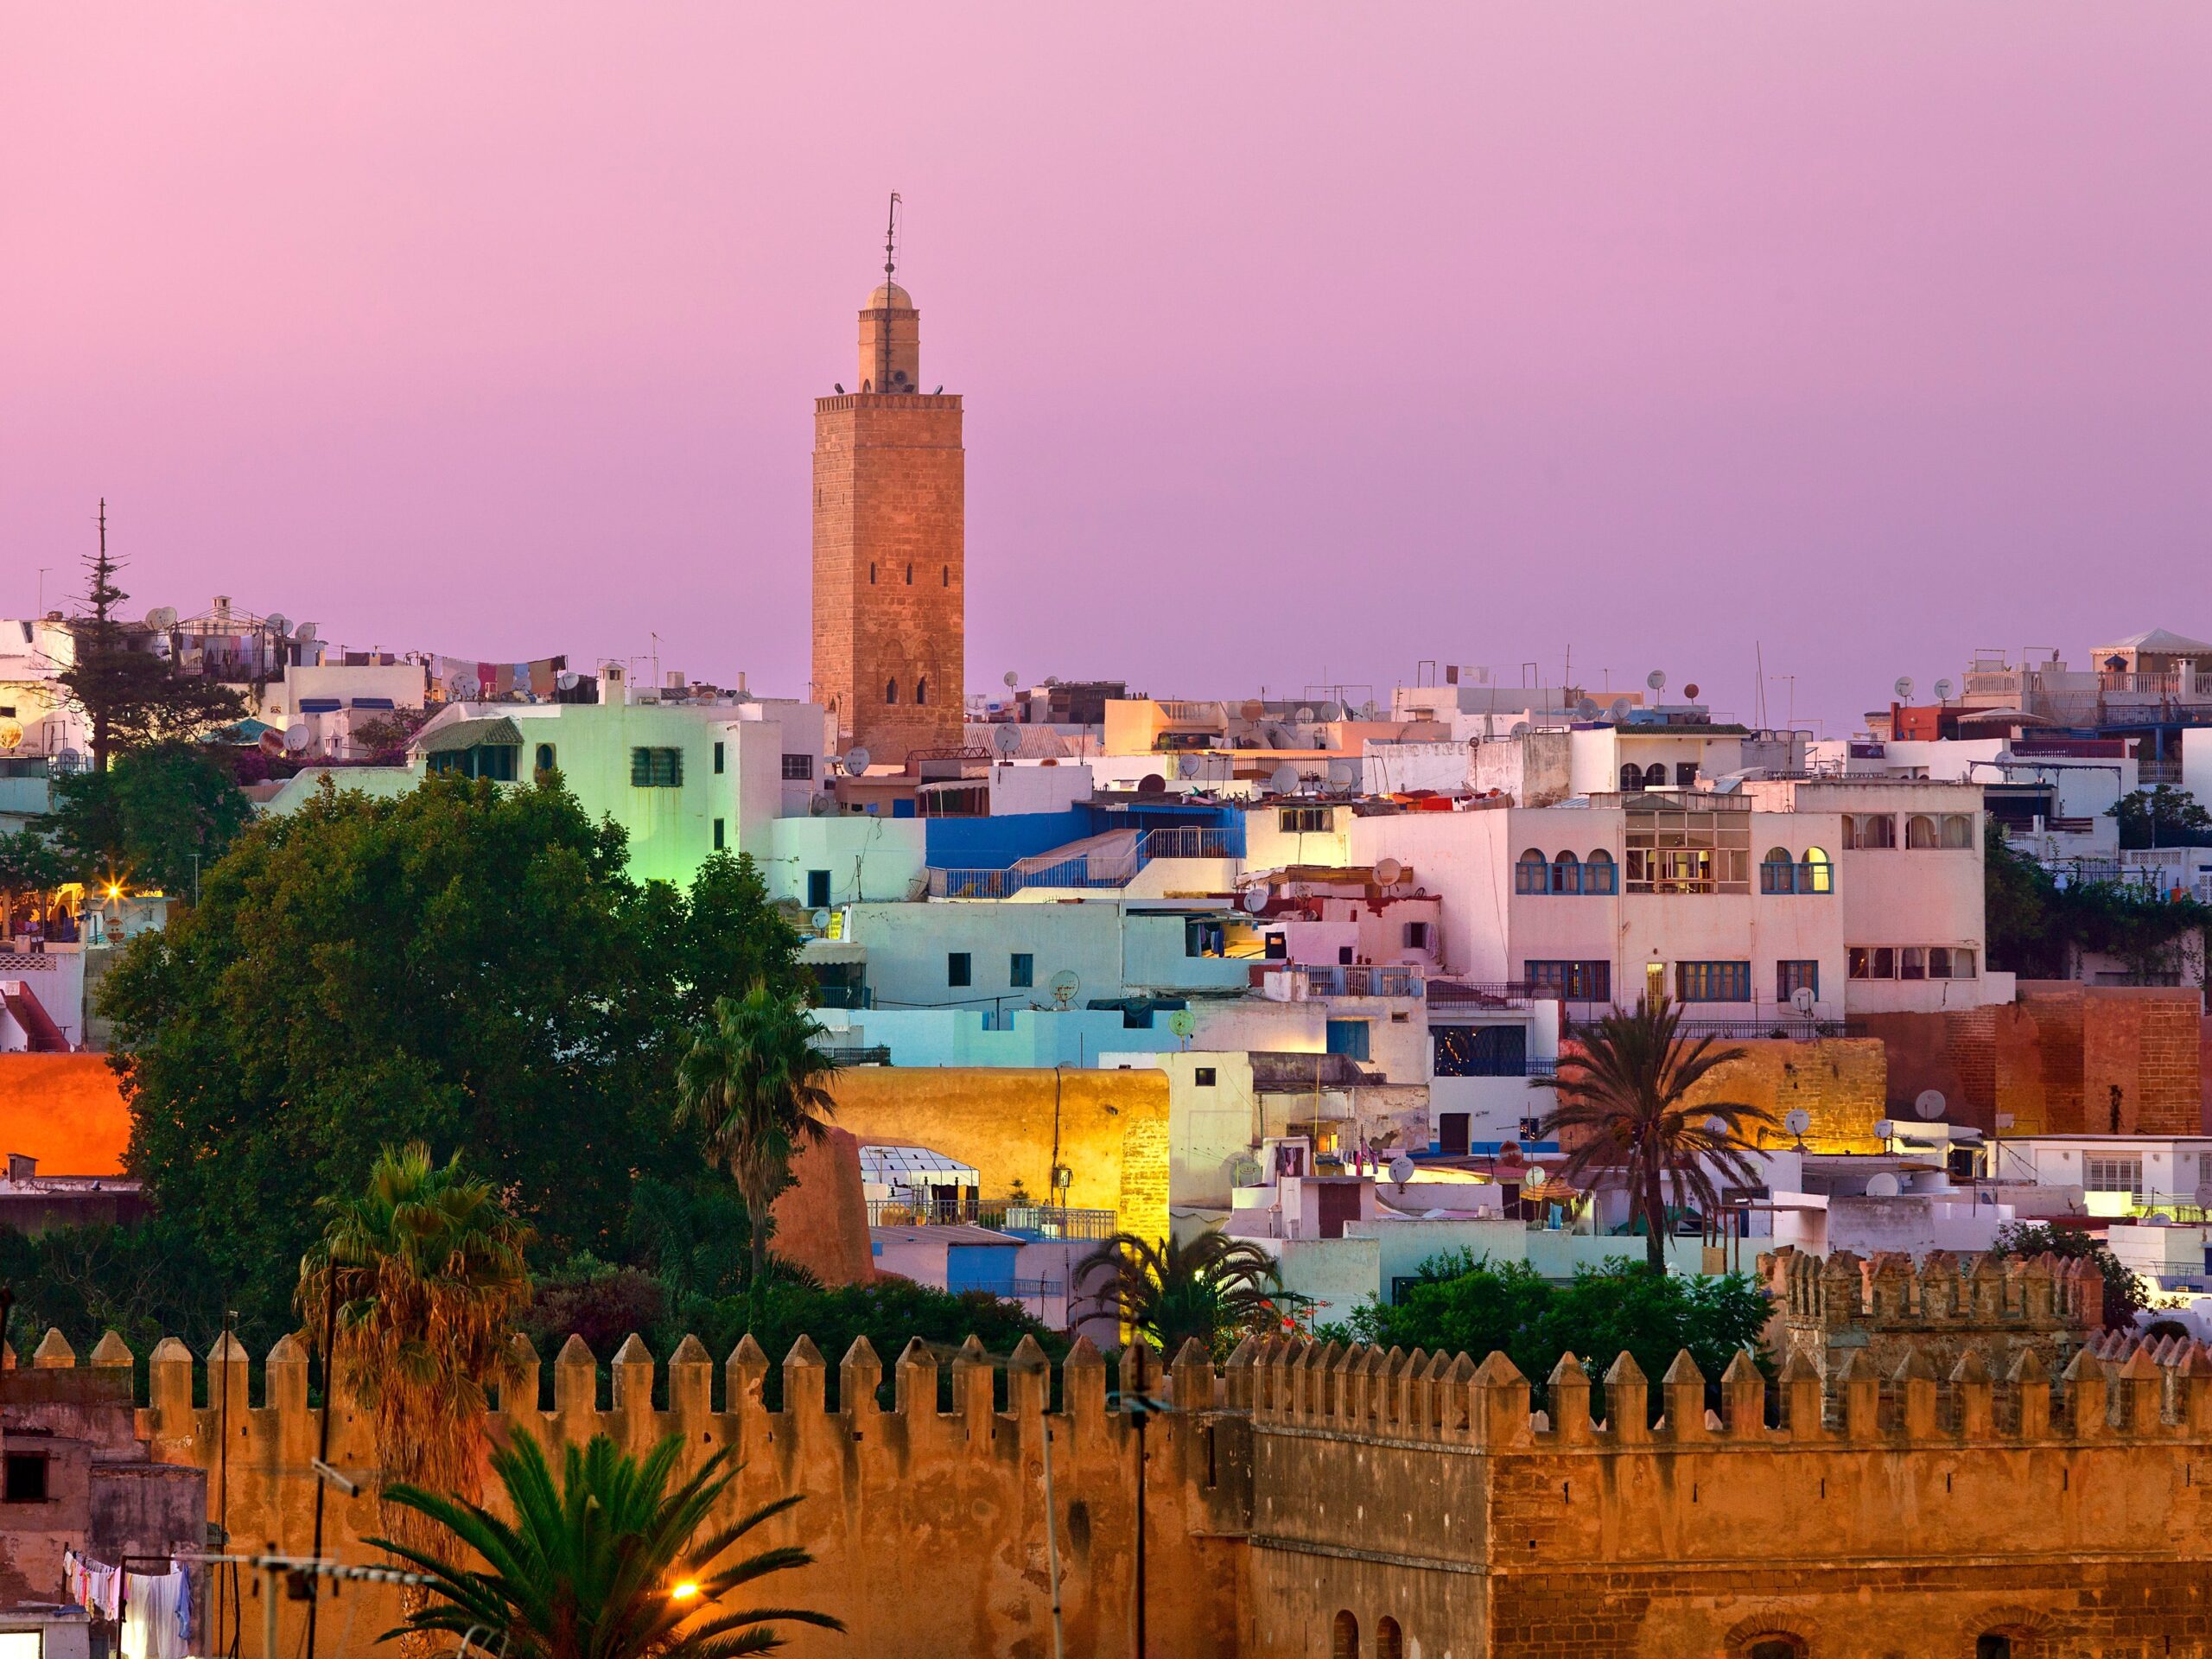 The city of Rabat, Morocco